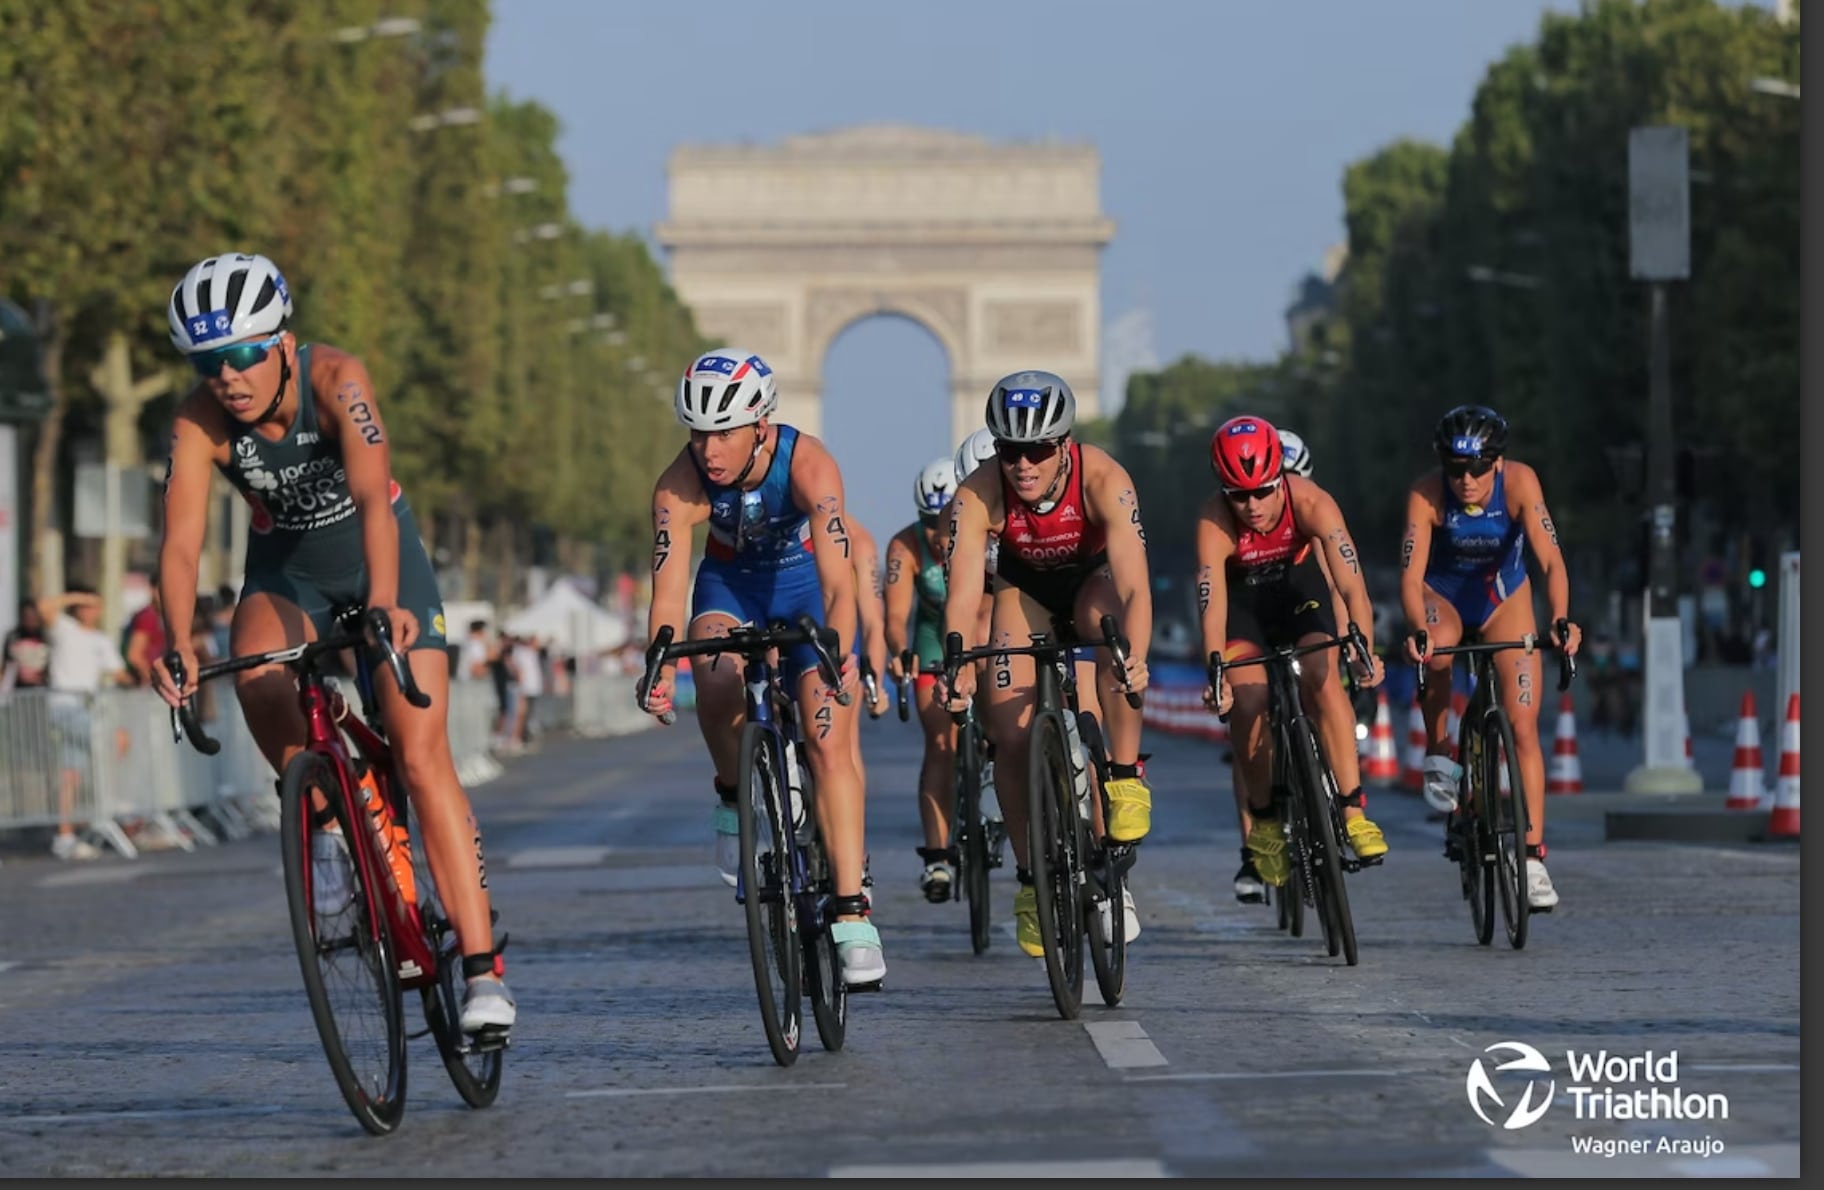 WorldTriathlon/ the peloton with the Arc de Triomphe in the background